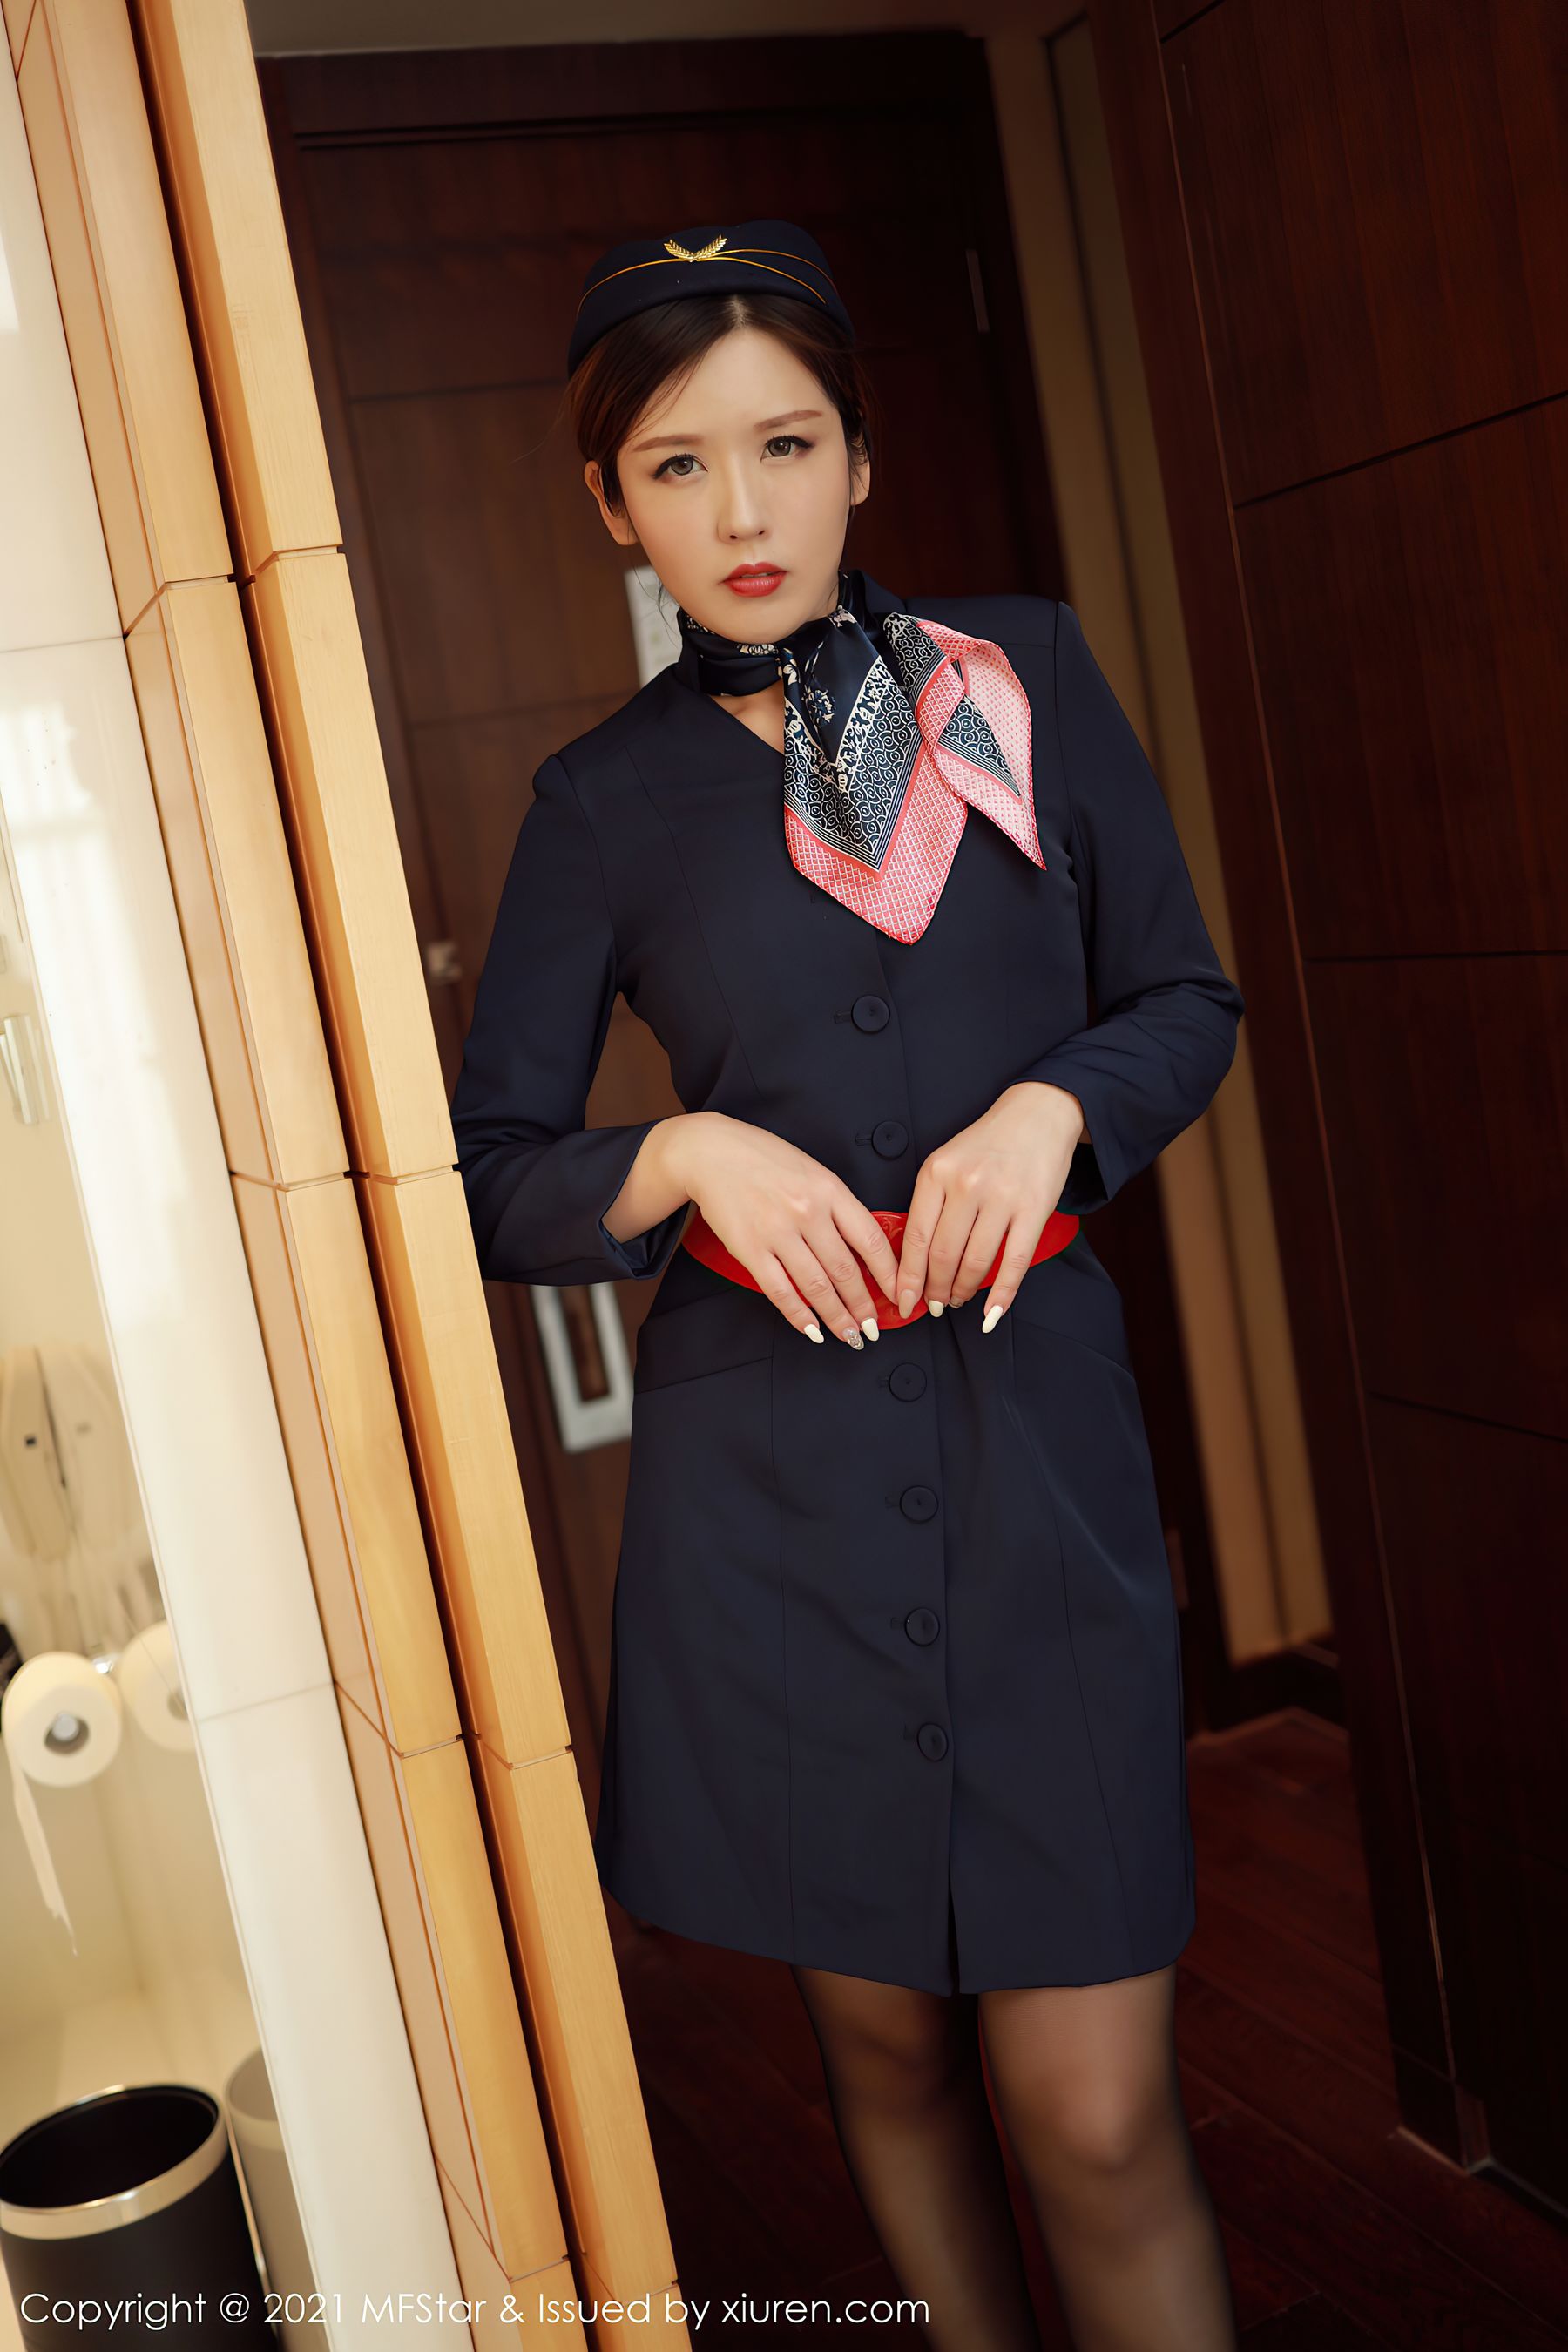 [Model Academy MFSTAR] Vol.437 Lsabelle Precious – Black Airport Professional Uniforms